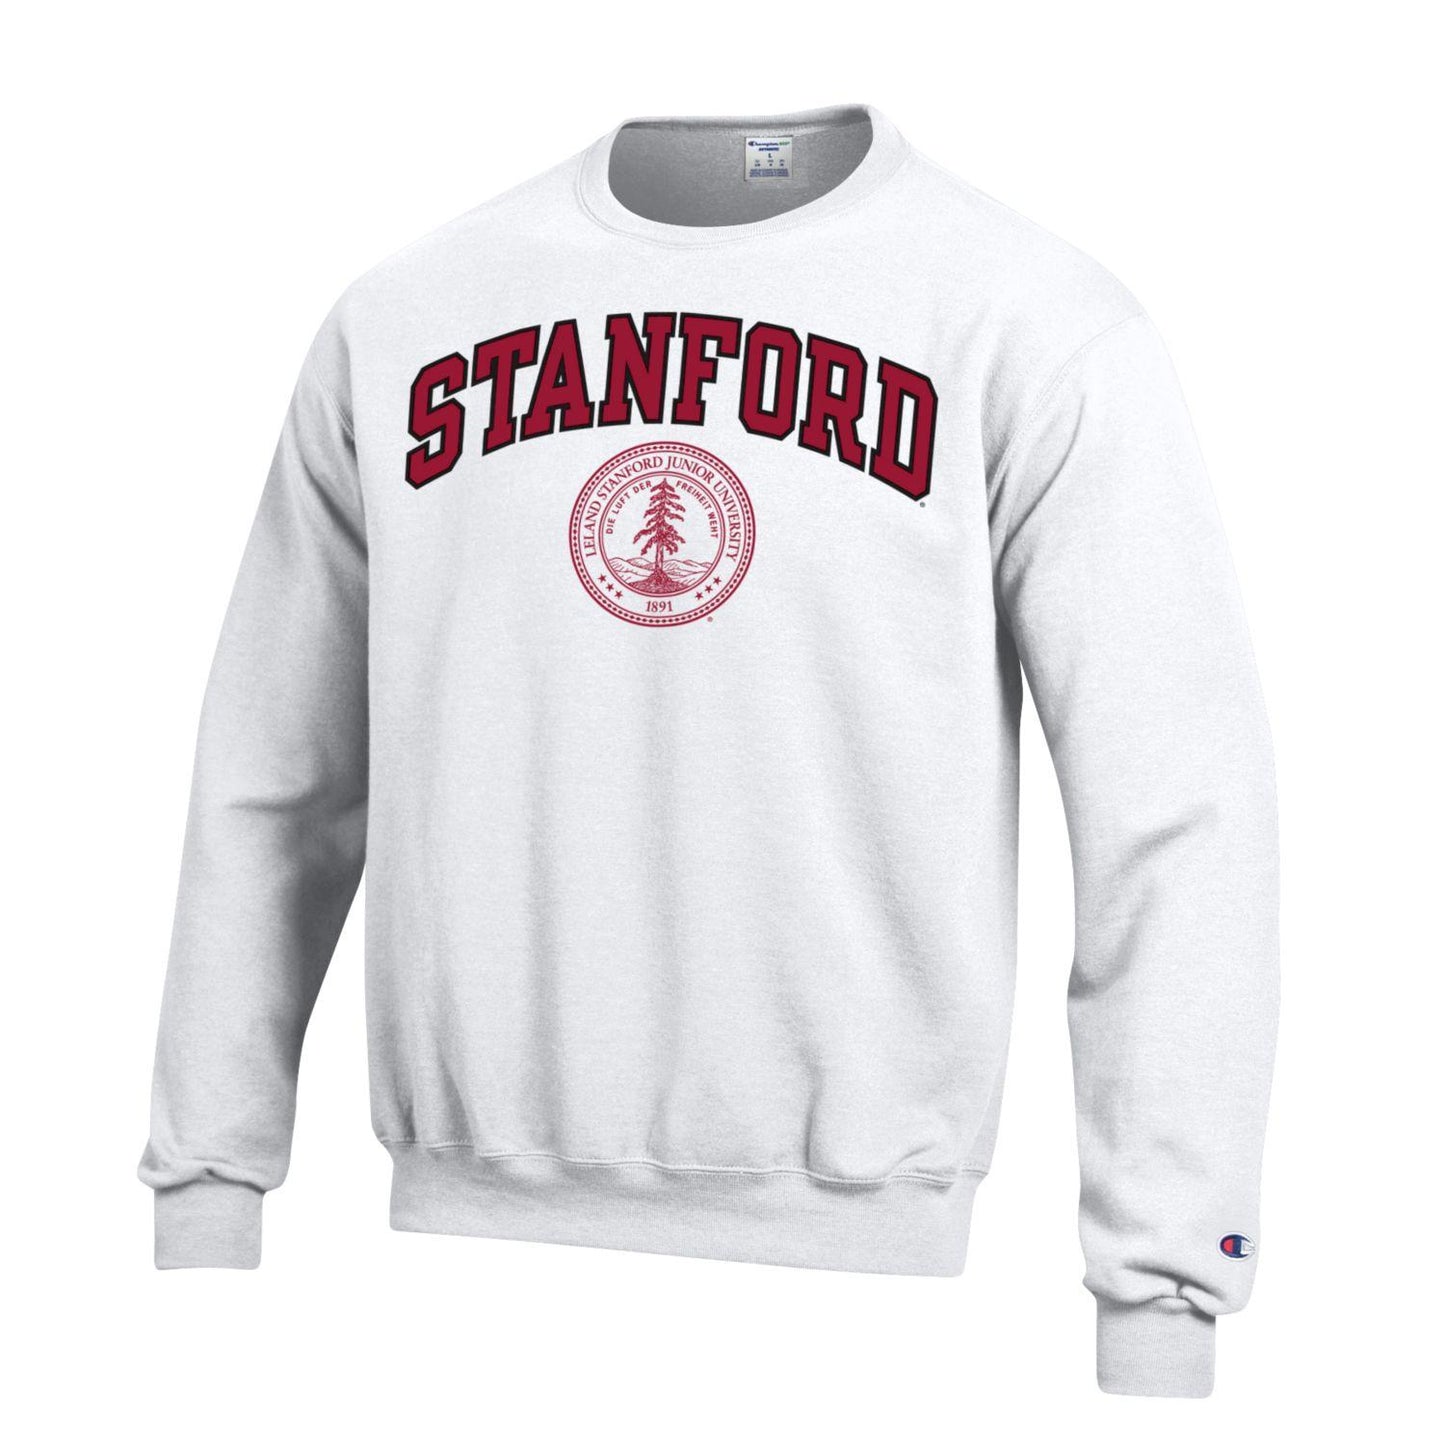 STANFORD UNIVERSITY Hoodies Sweatshirts men women unisex Cotton